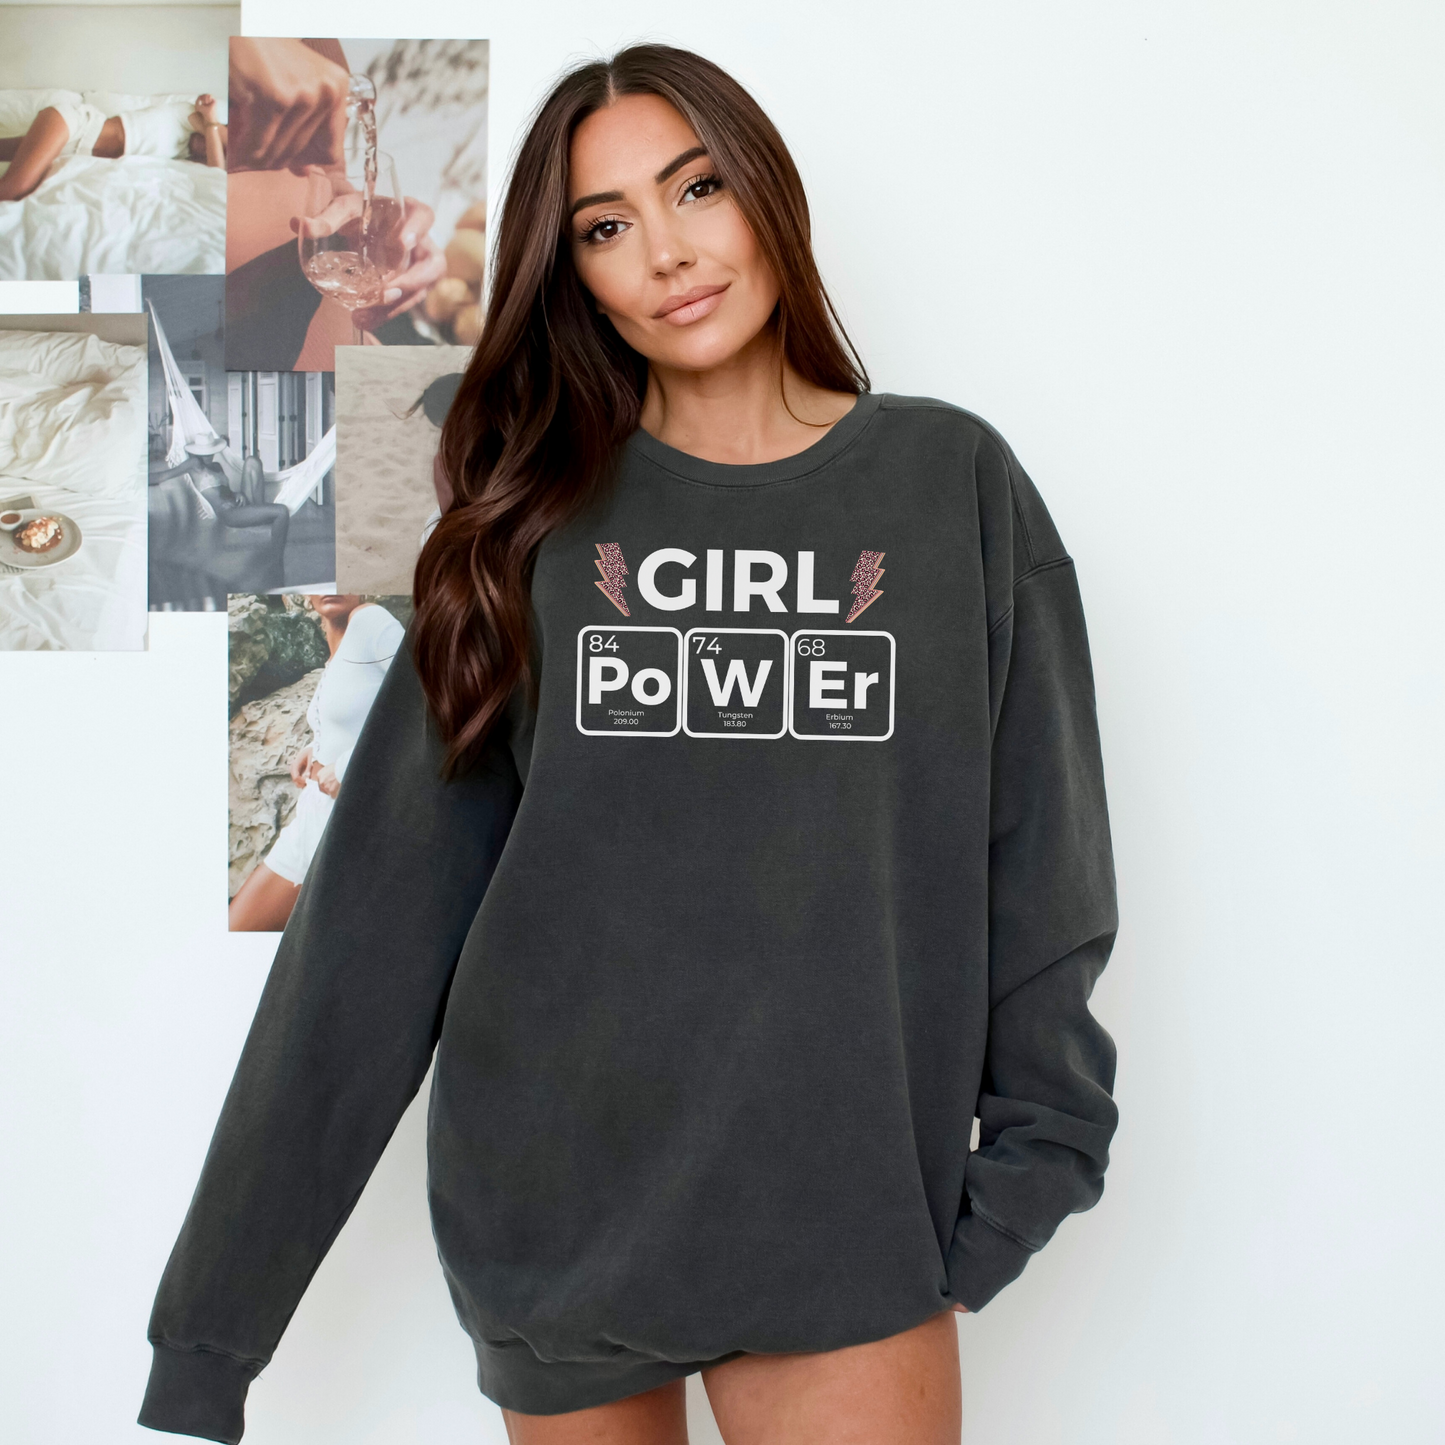 a woman wearing a sweatshirt that says girl power